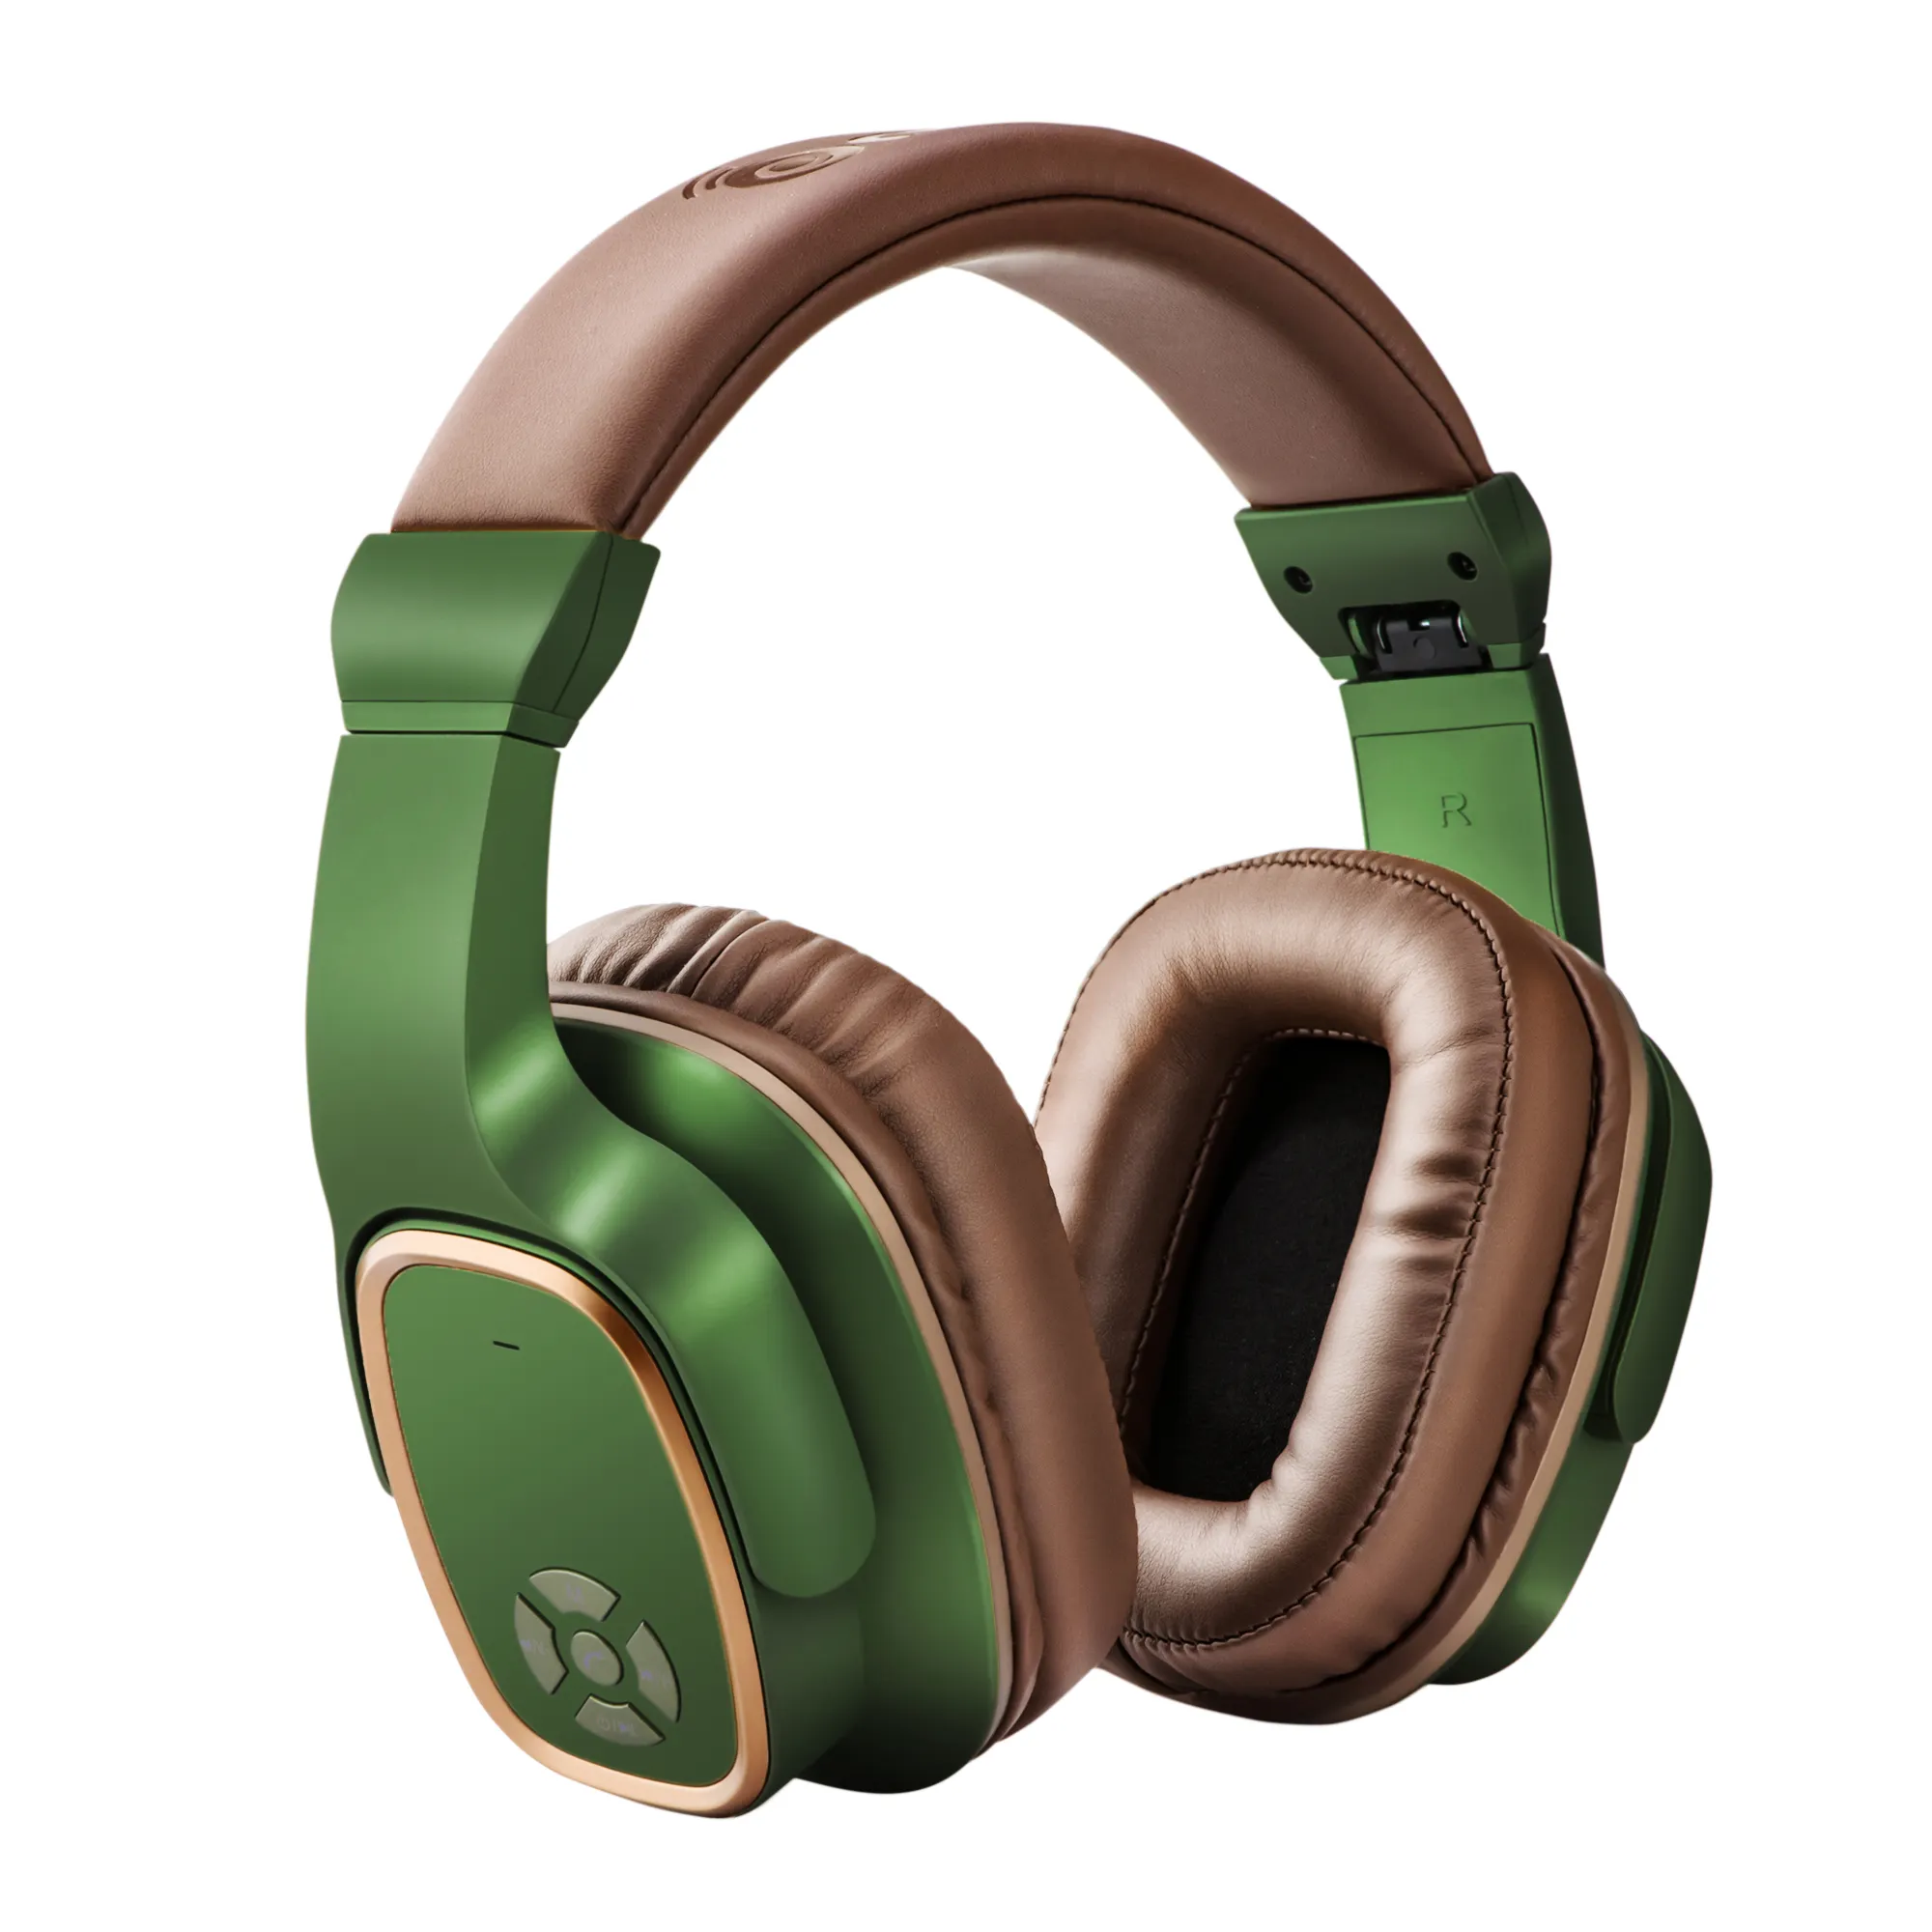 2020 OneDer S2 consumer electronics wireless earphone gaming headset Bluetooth headphone